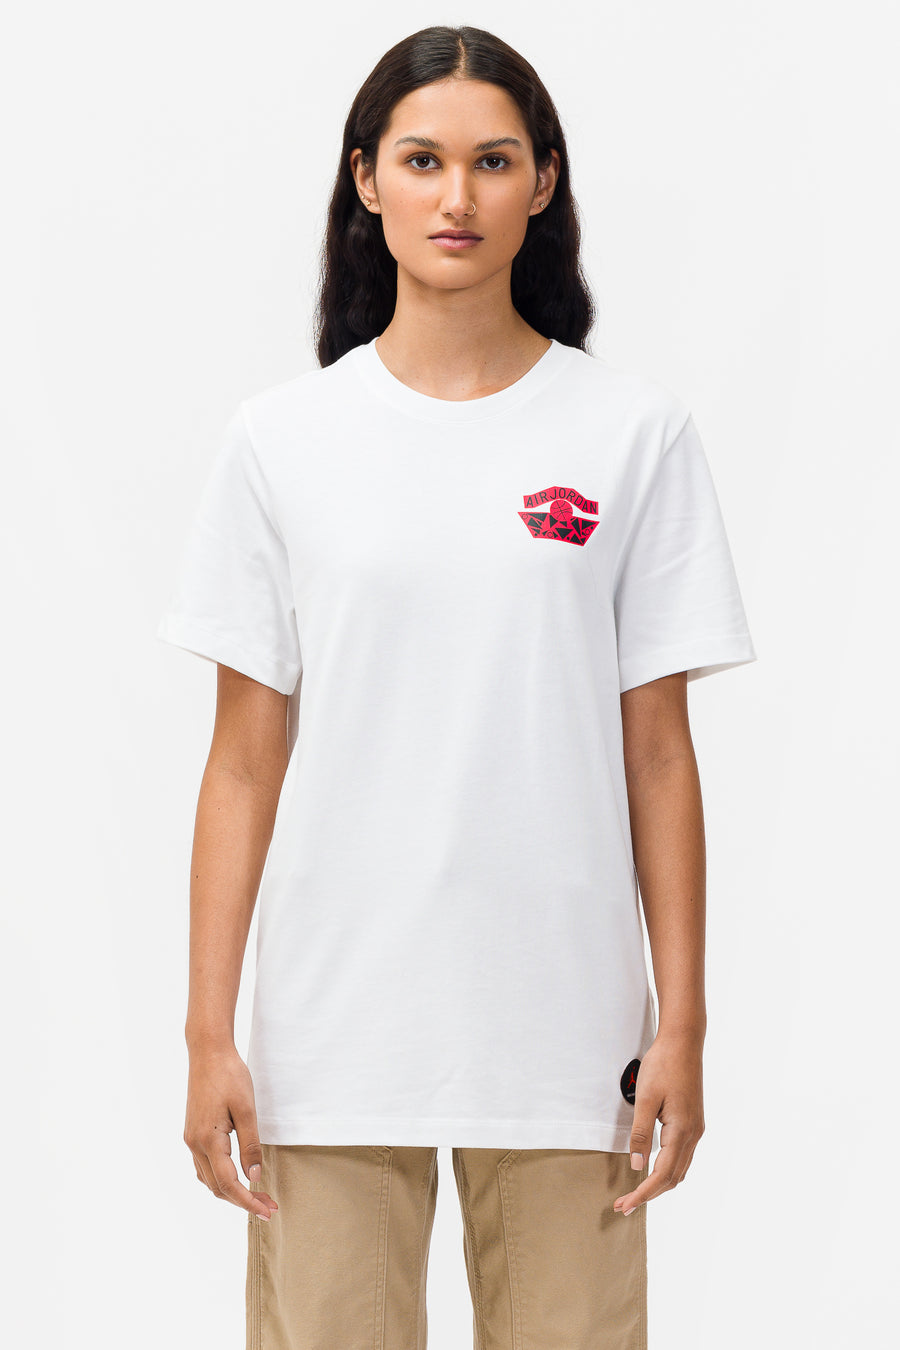 Nina Chanel Abney Logo T-Shirt in White